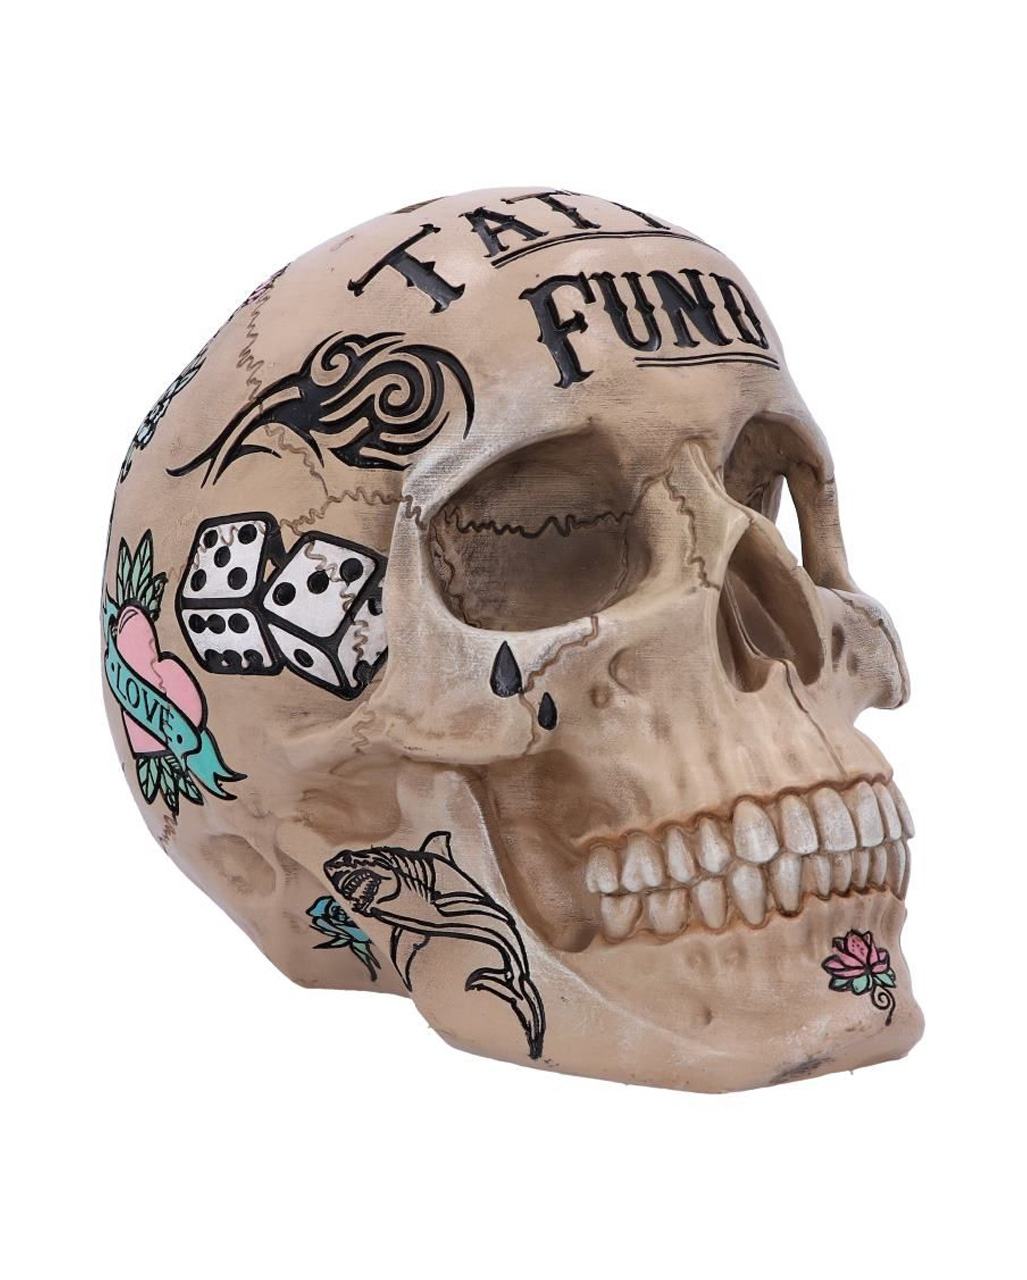 Now bone. Копилка Tattoo. Копилка на тату. Копилка на татуировку. Skull with Map Veronese.